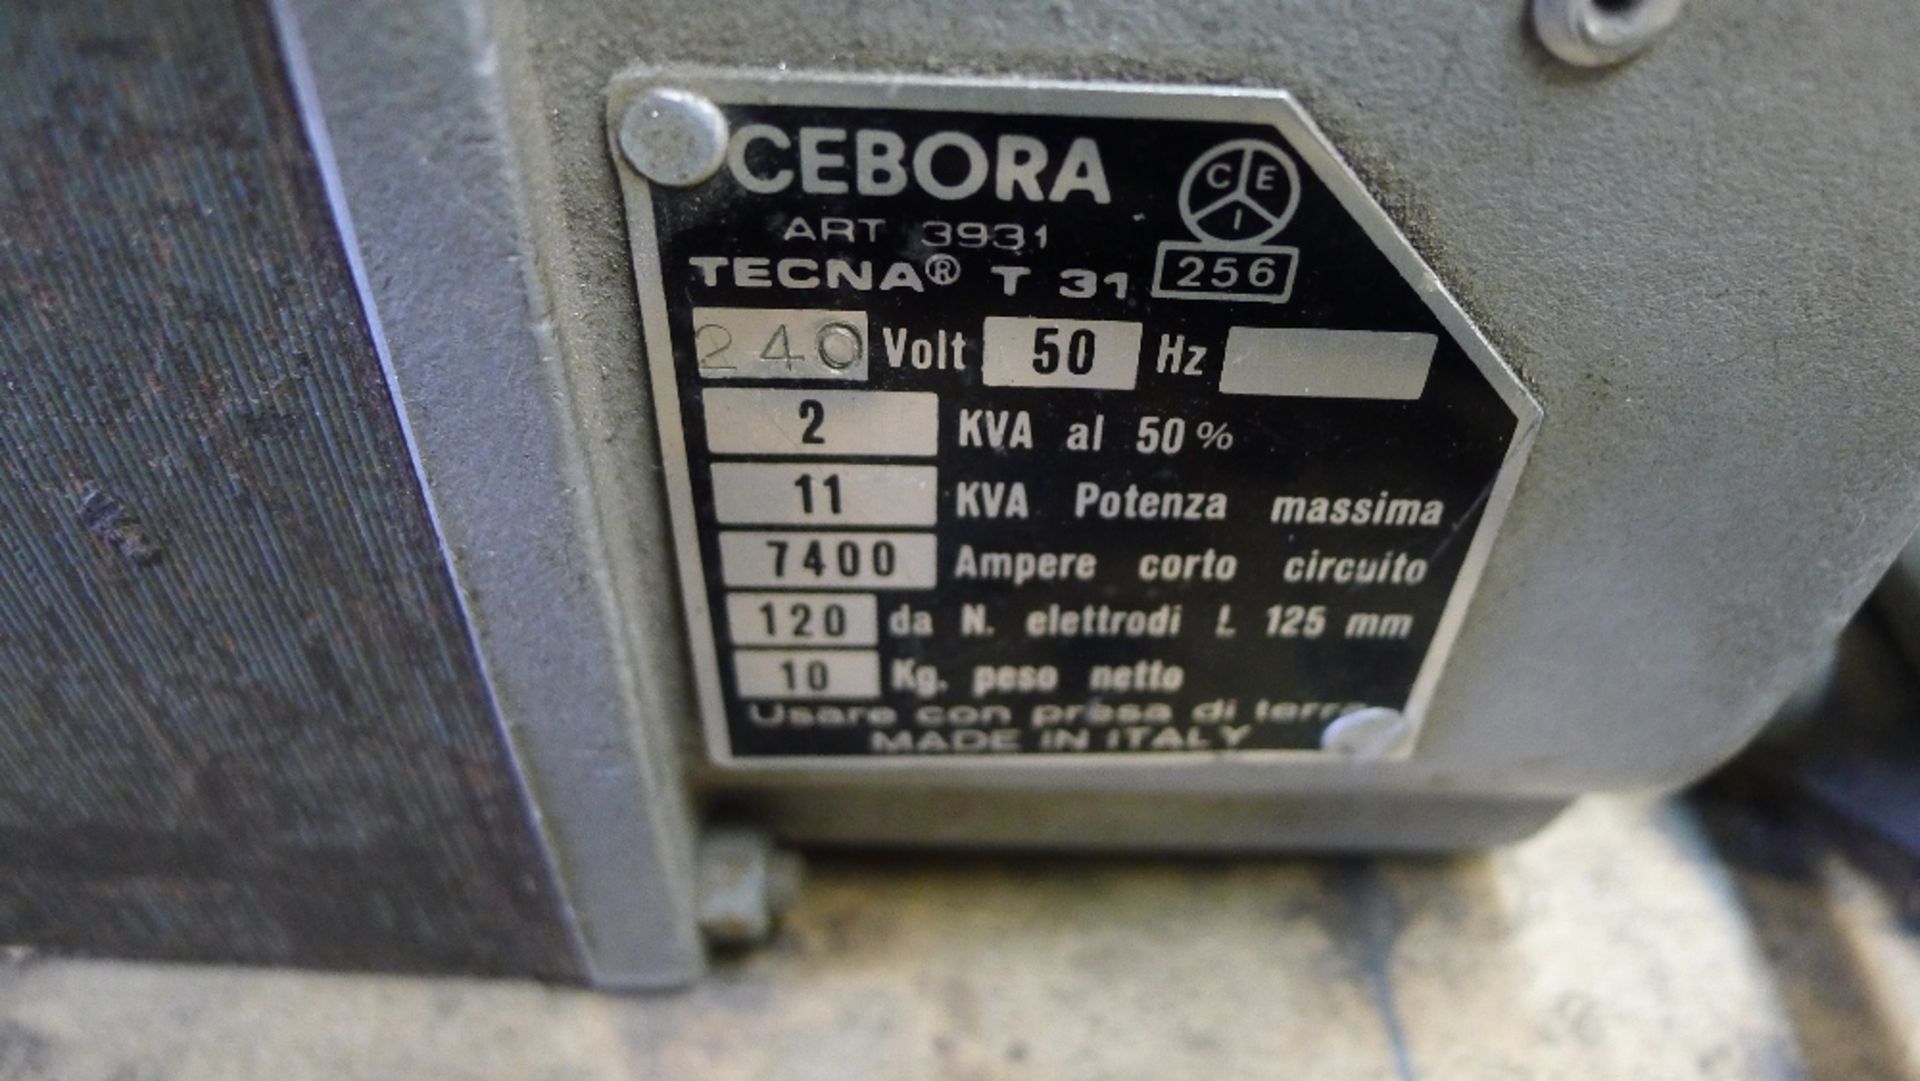 1 Cebora spot welder type Tecna T31, 240v and 1 marking tool - Image 2 of 3